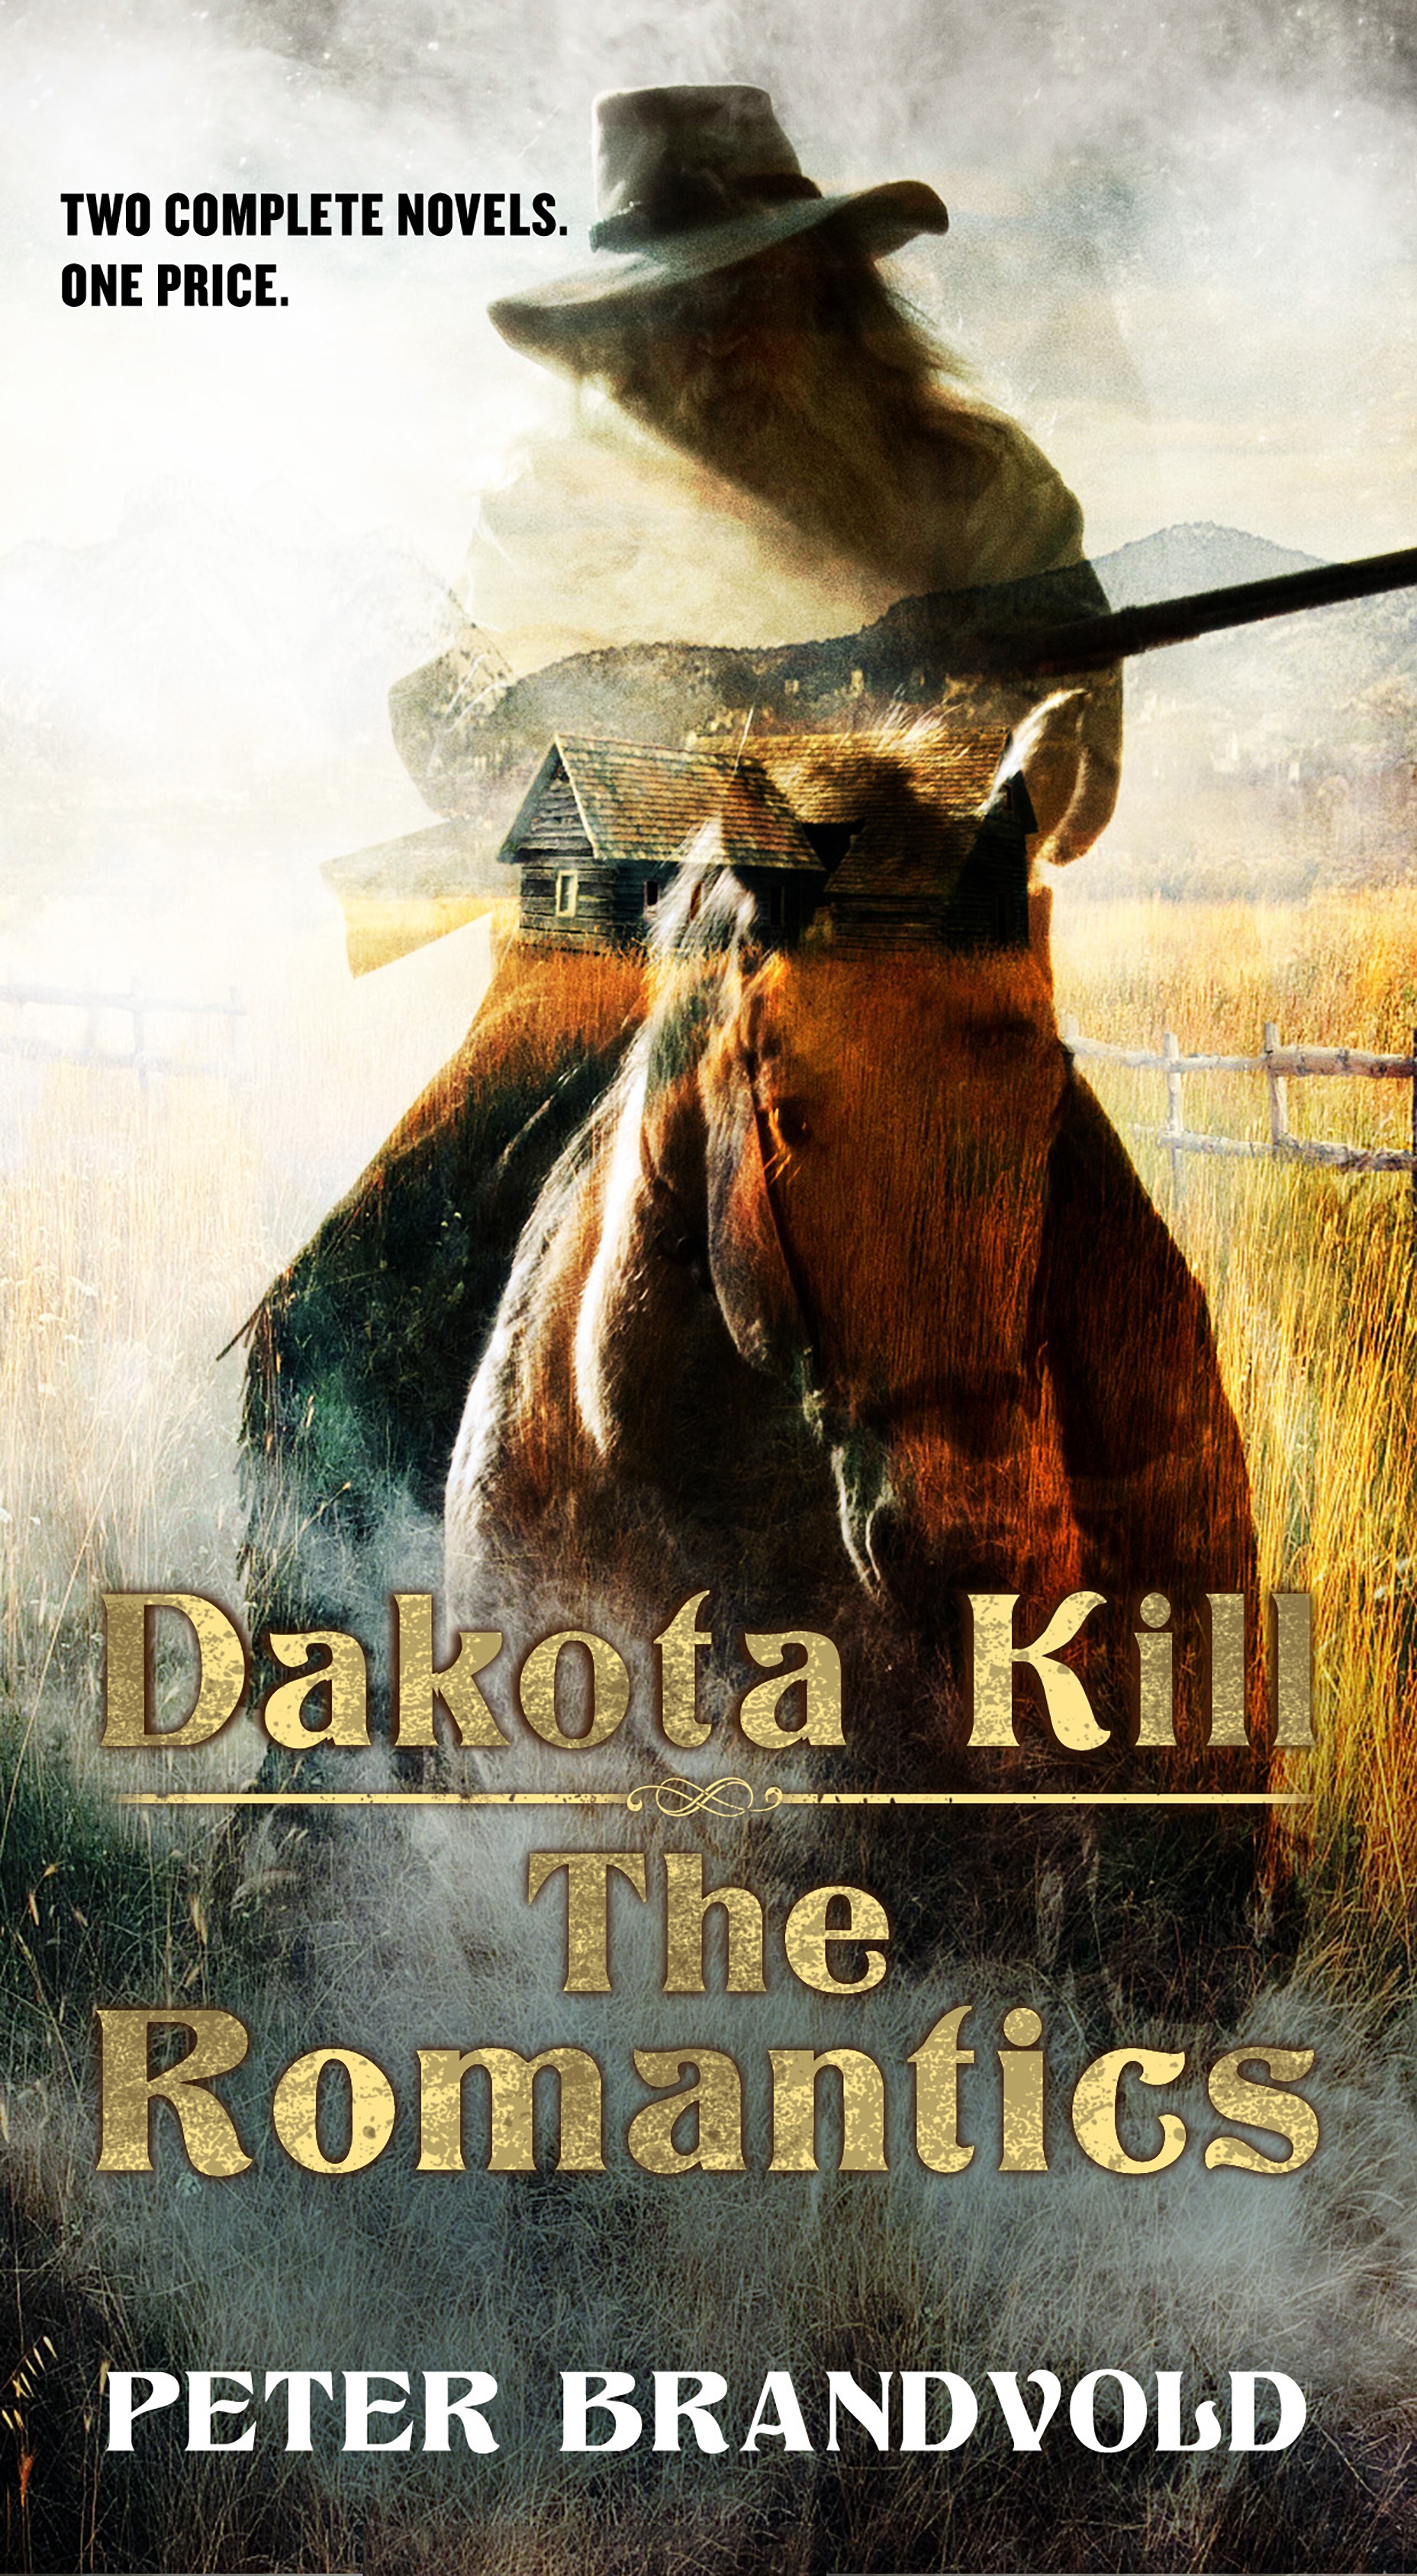 Dakota Kill and The Romantics by Peter Brandvold